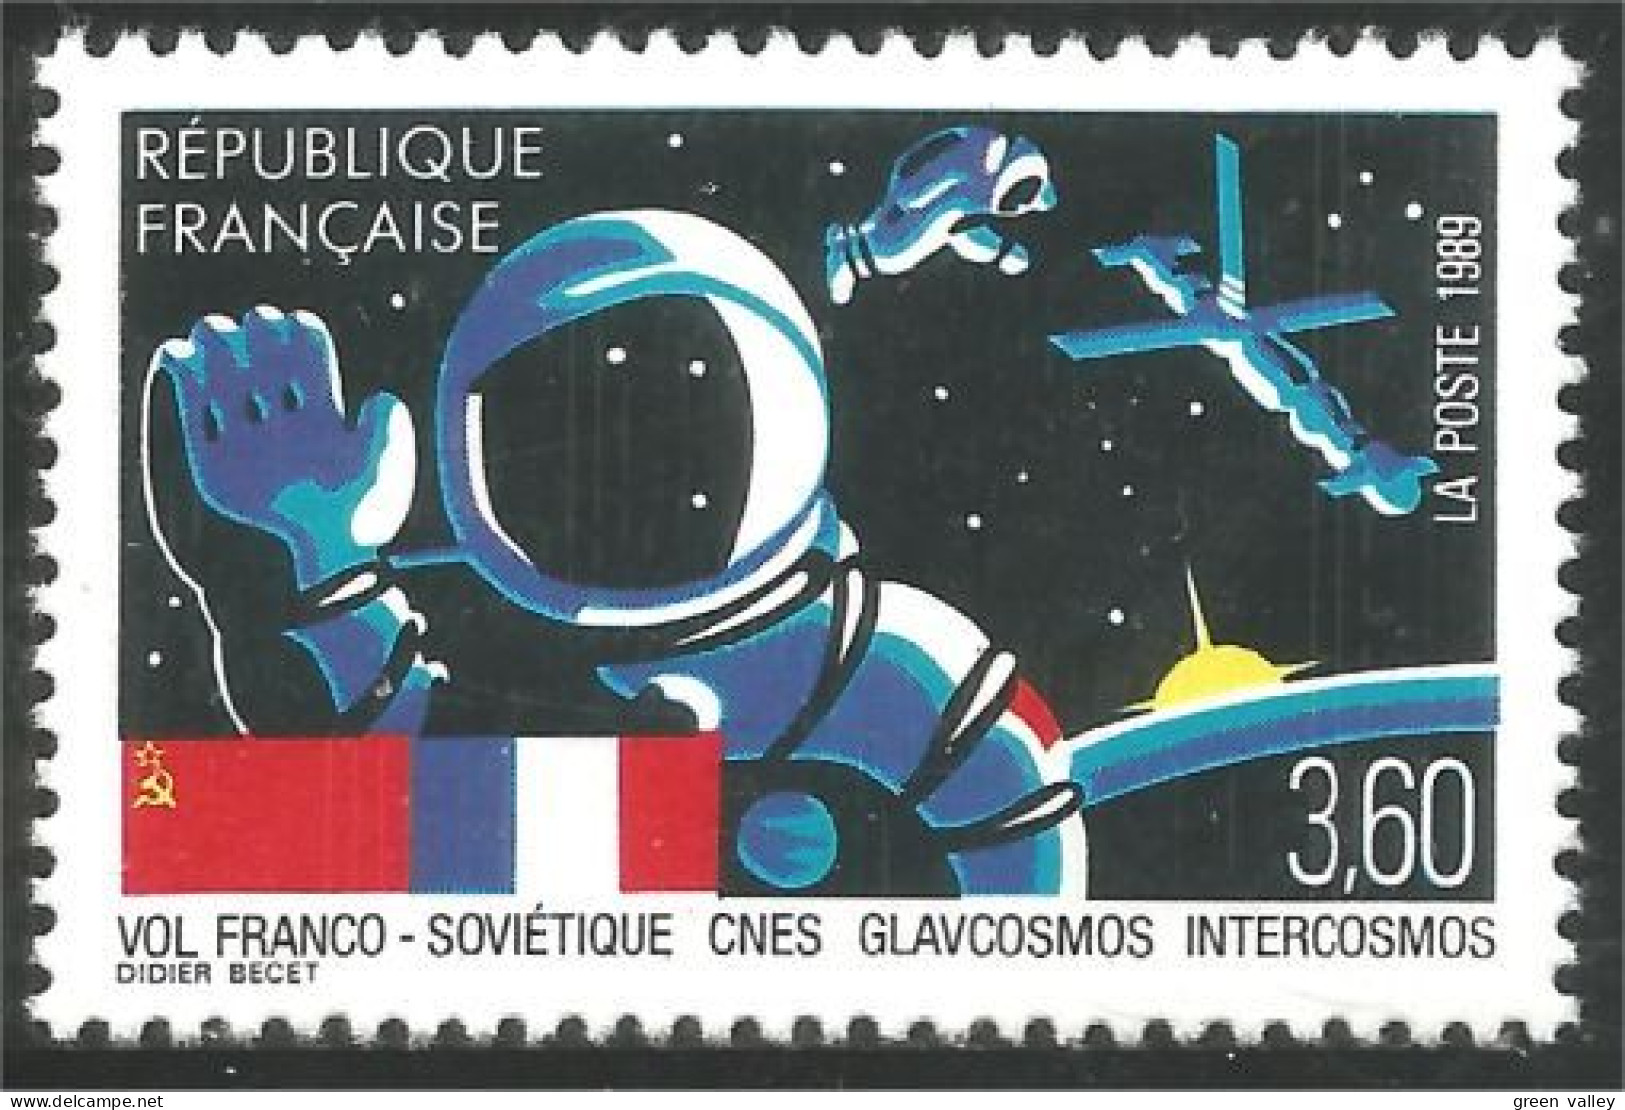 355 France Yv 2571 Espace Space Cosmonaute Cosmonaut Drapeau Flag MNH ** Neuf SC (2571-1b) - Sellos